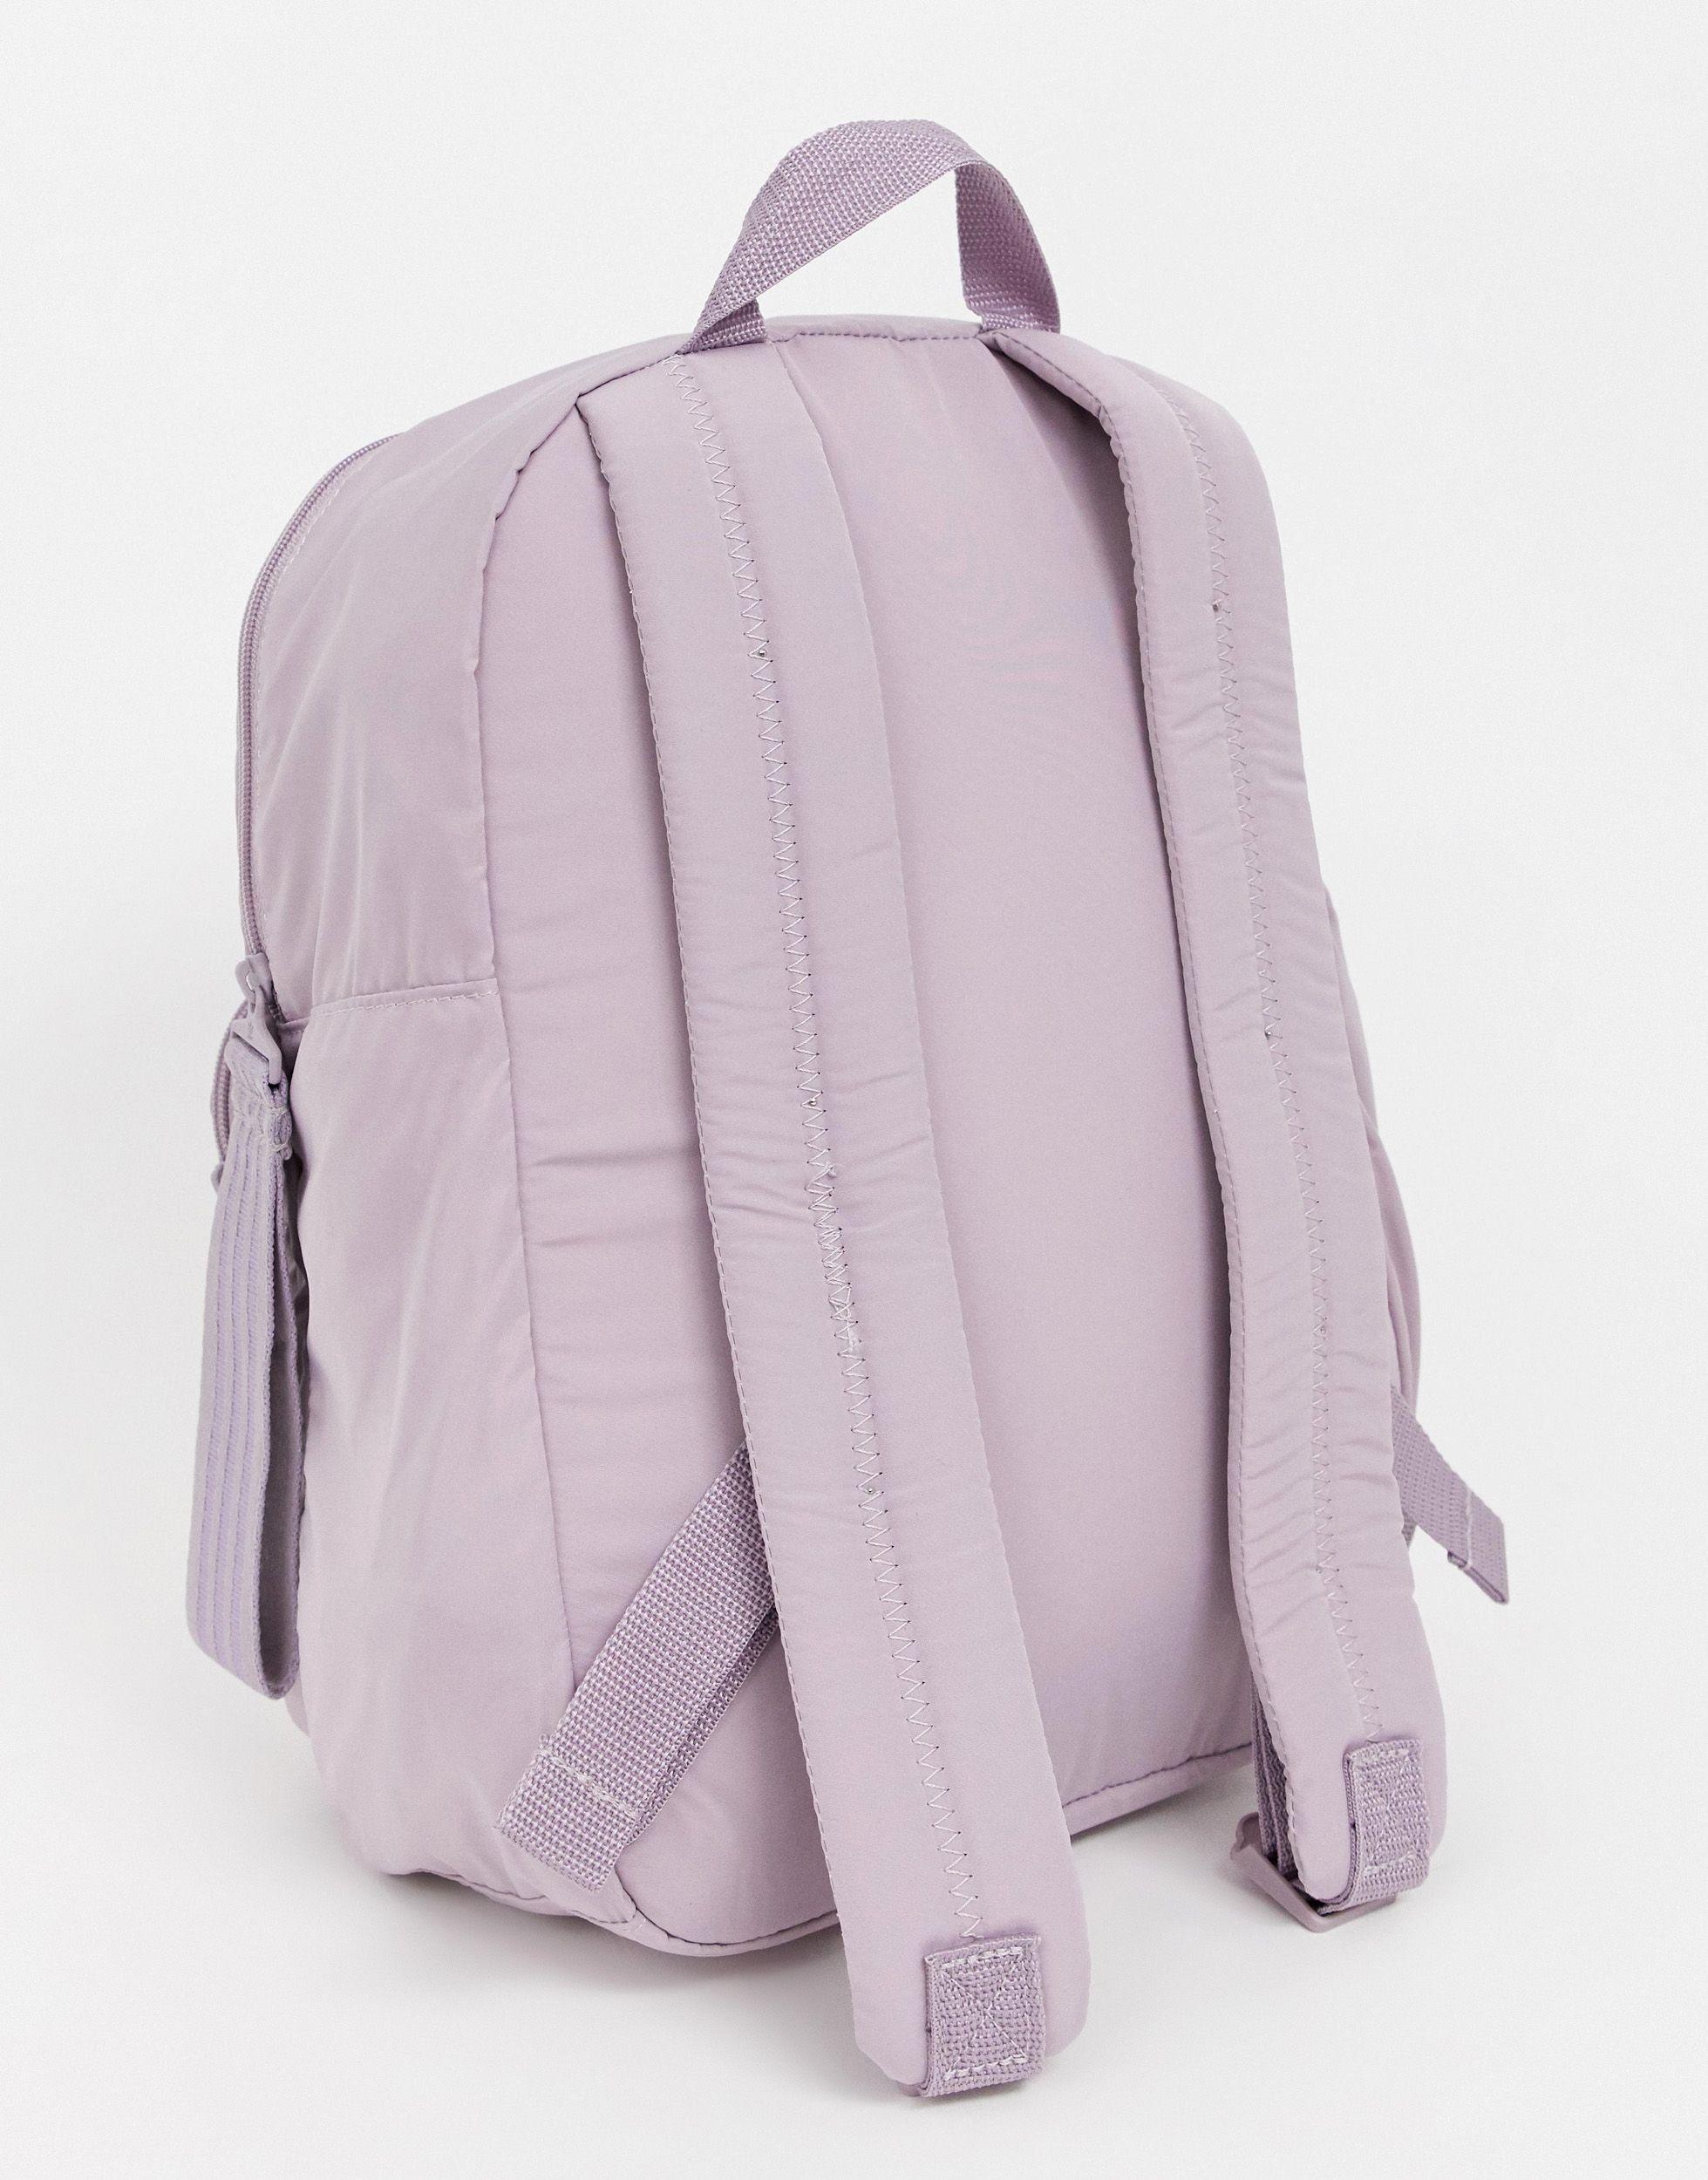 adidas originals sleek backpack